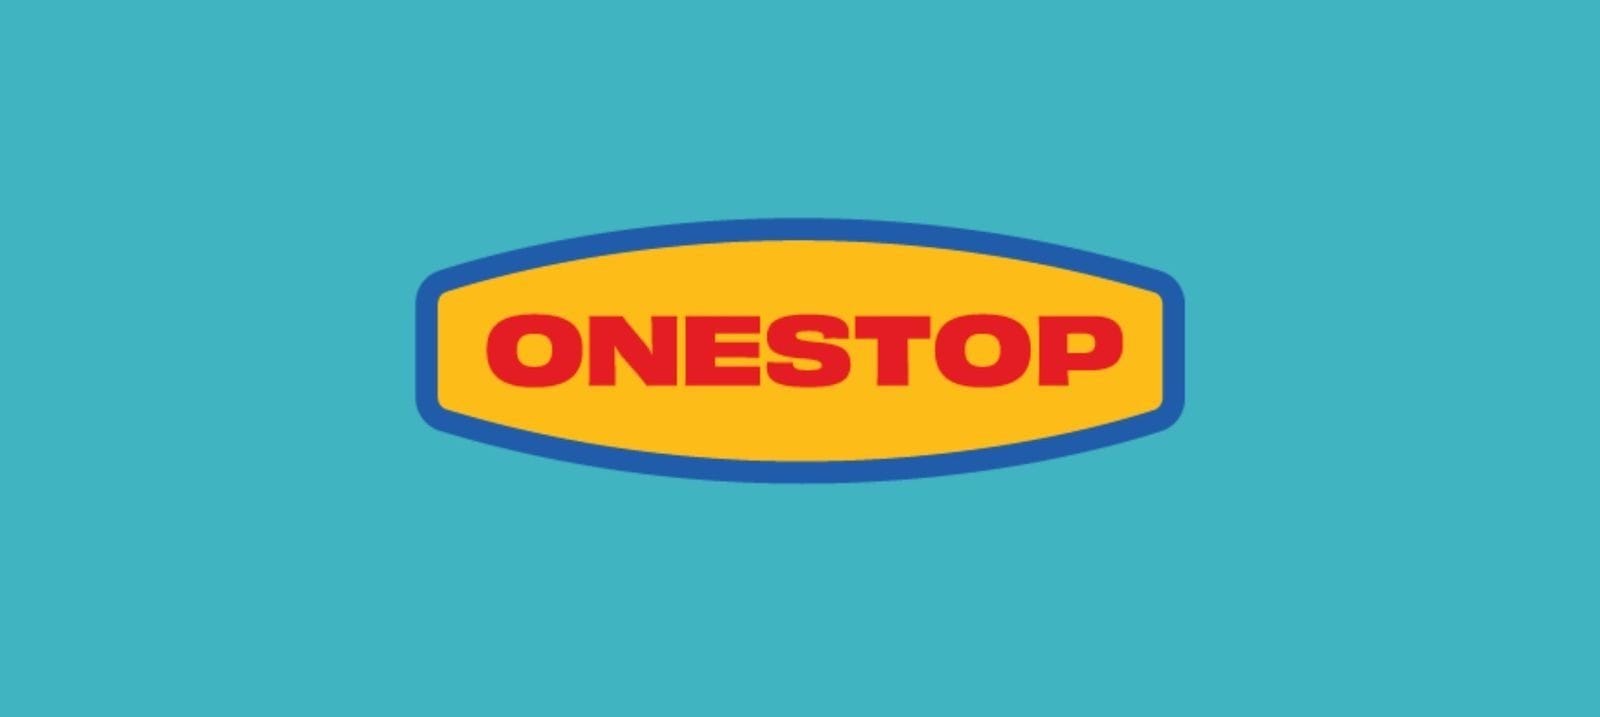 GL OneStop Brand